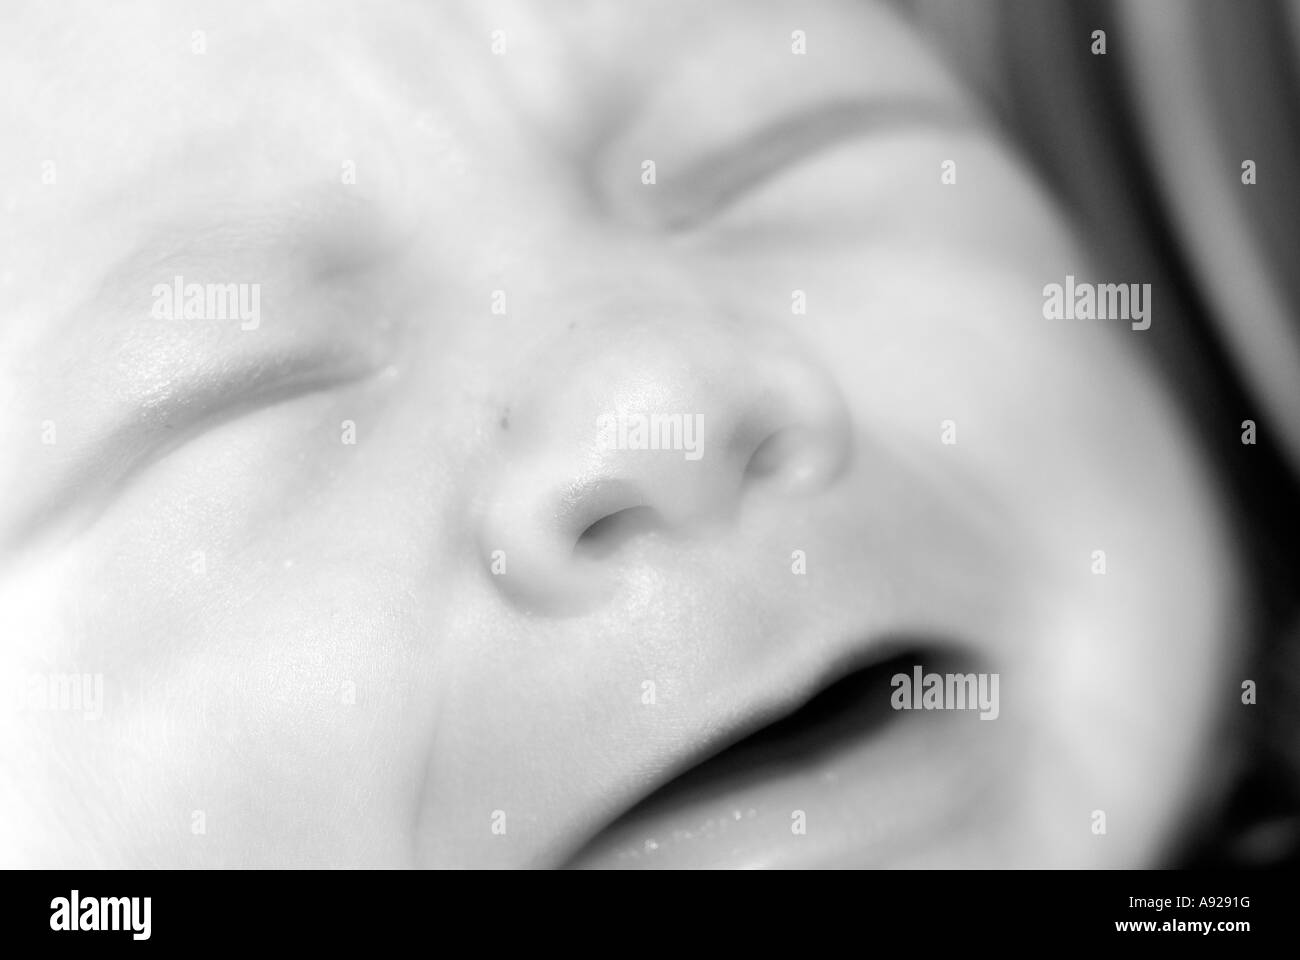 Baby crying, close-up Stock Photo